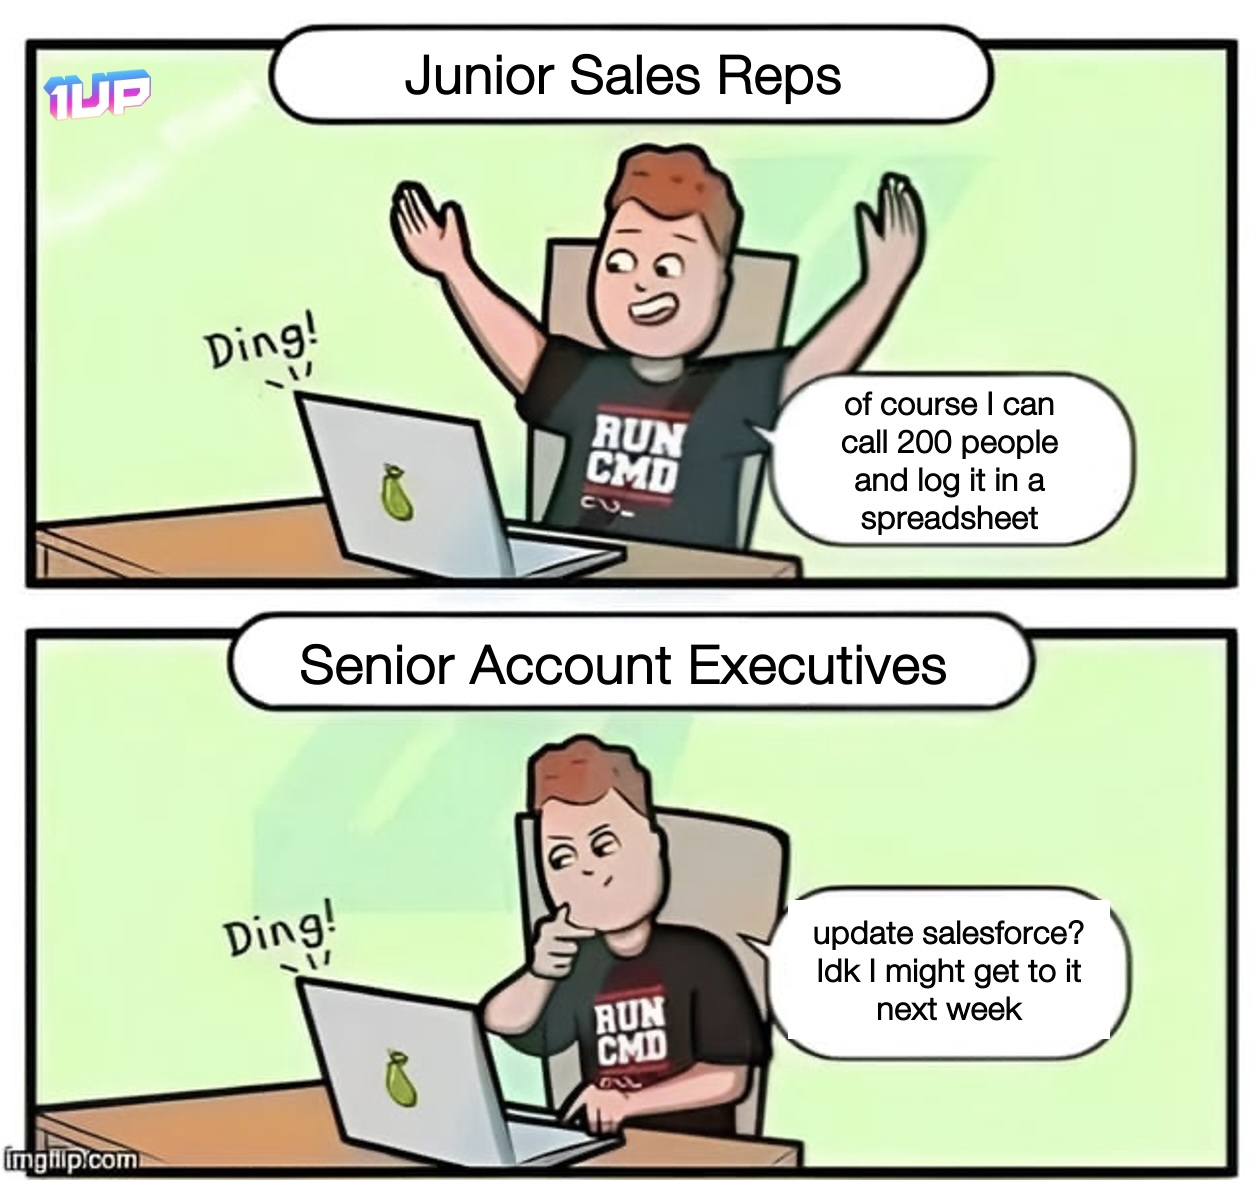 Junior Sales Reps vs Senior AEs Meme